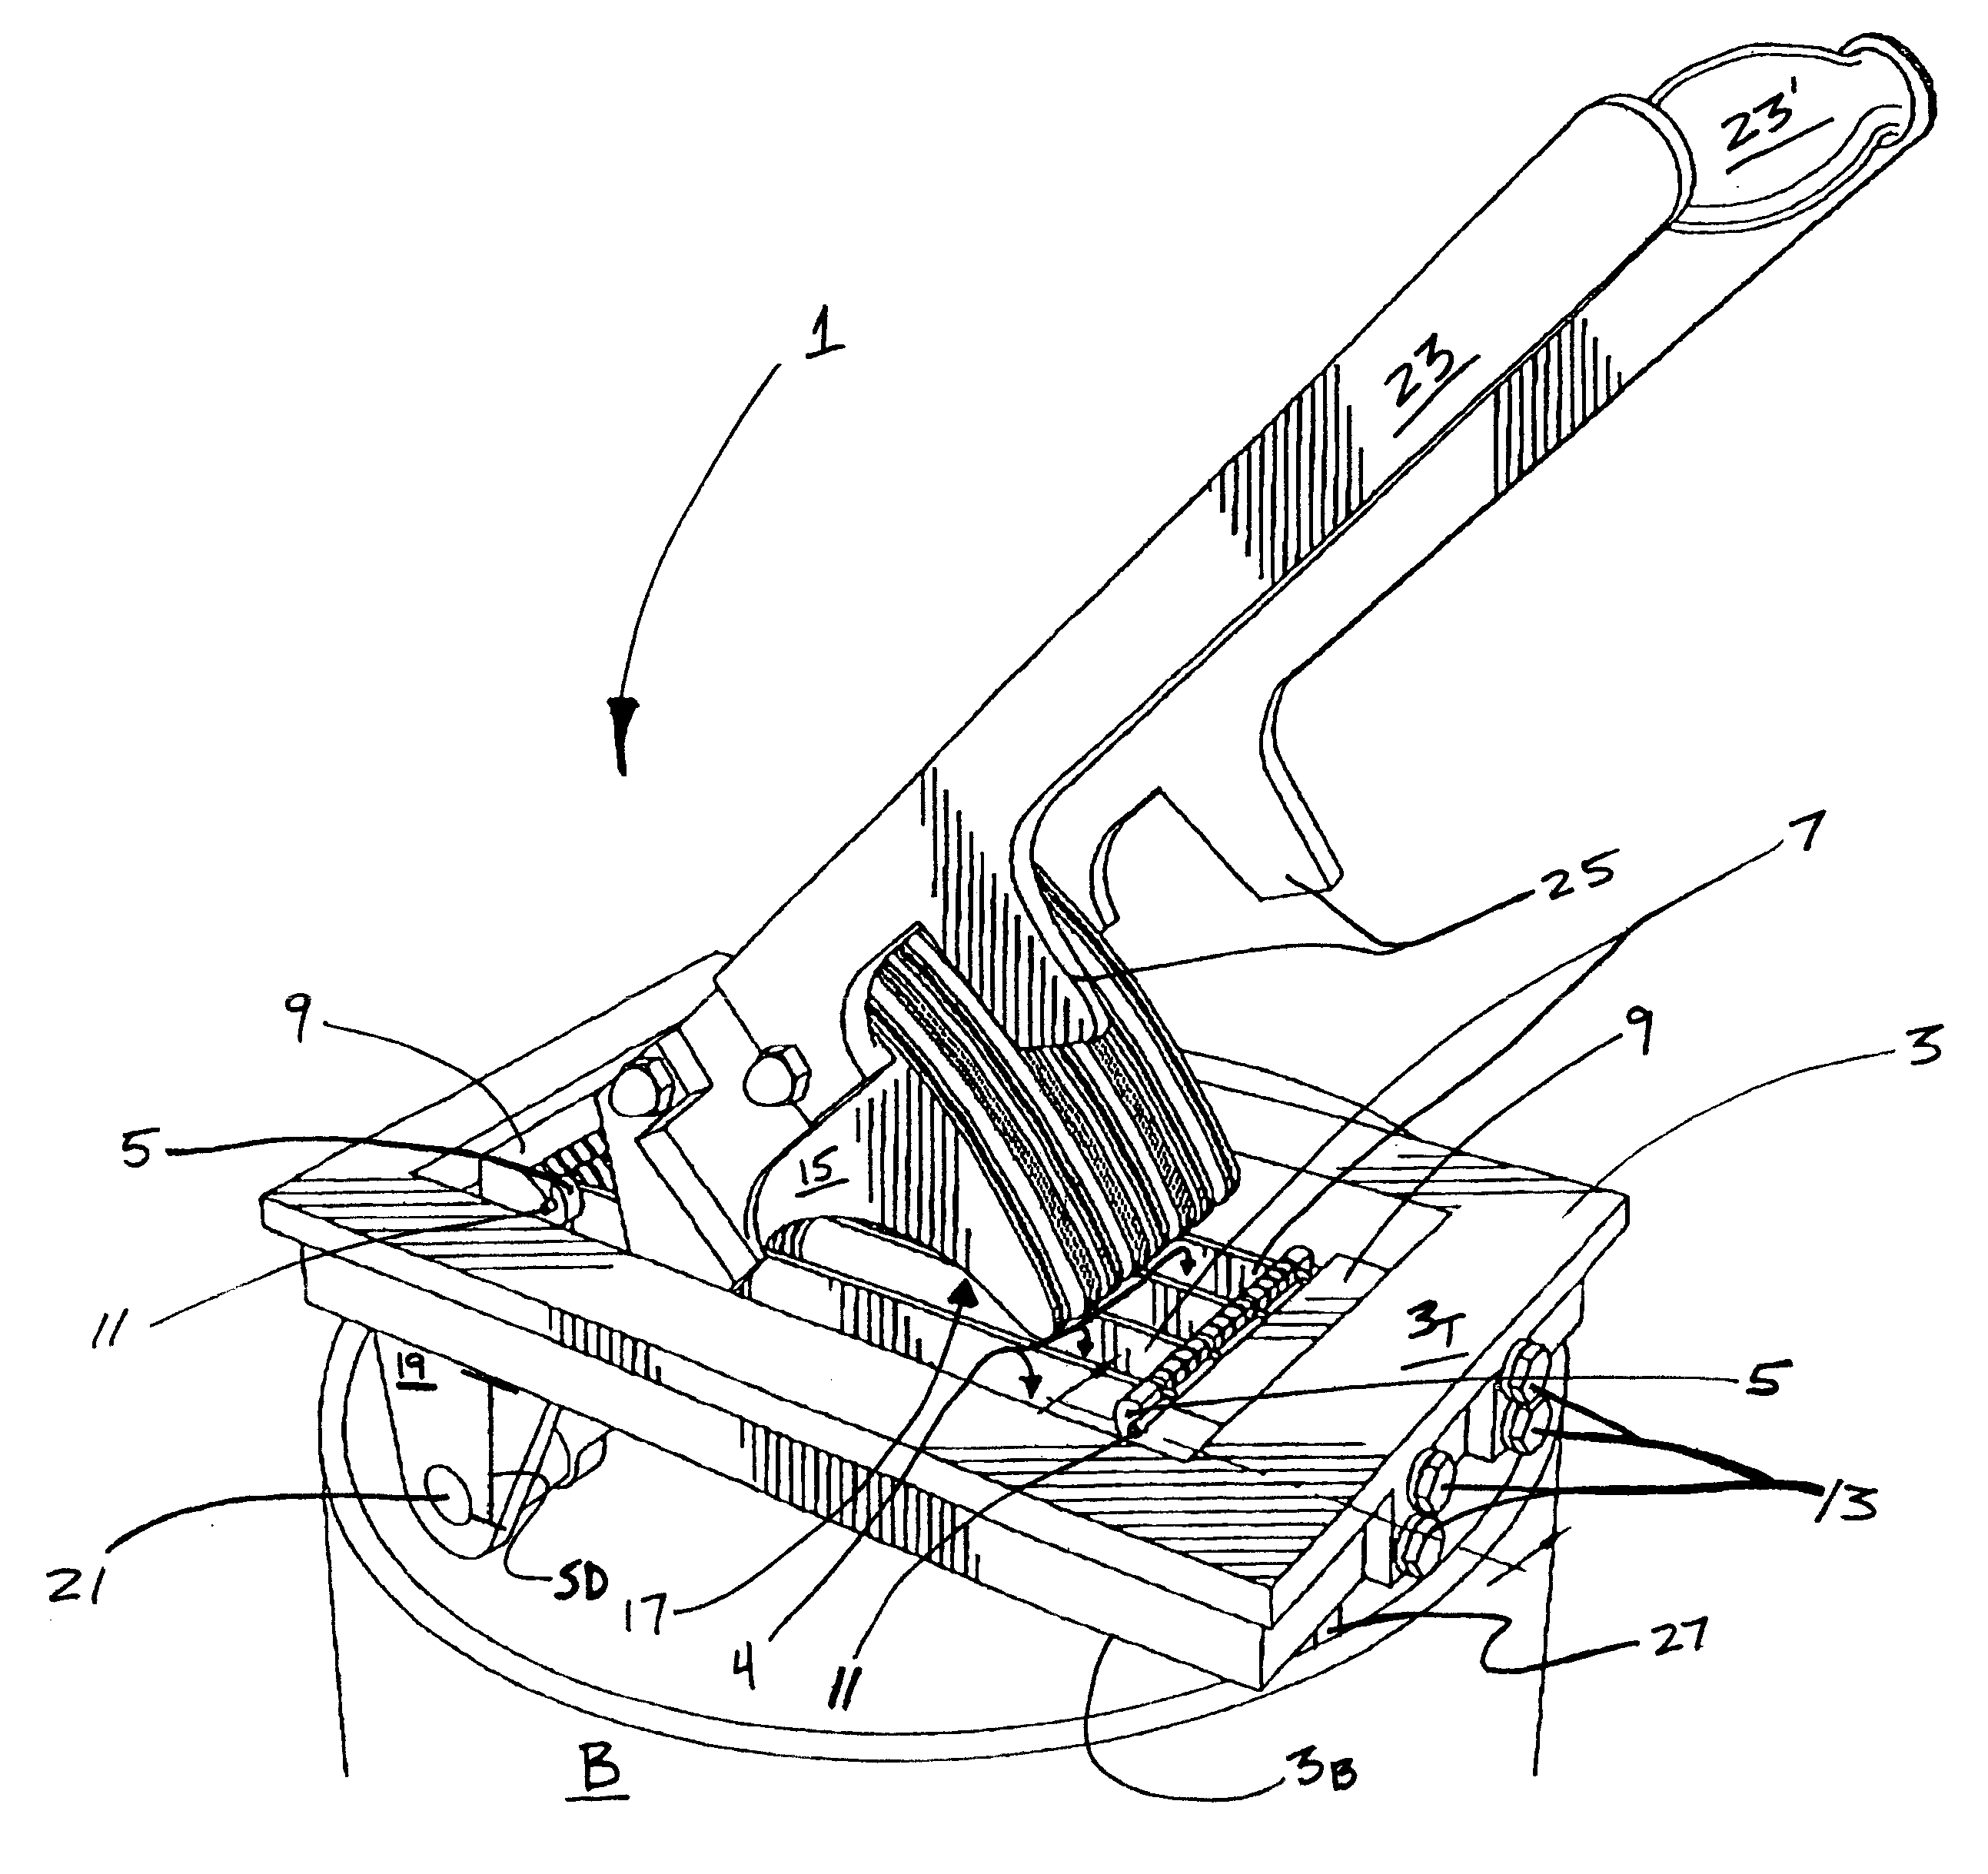 Baitfish chunking apparatus